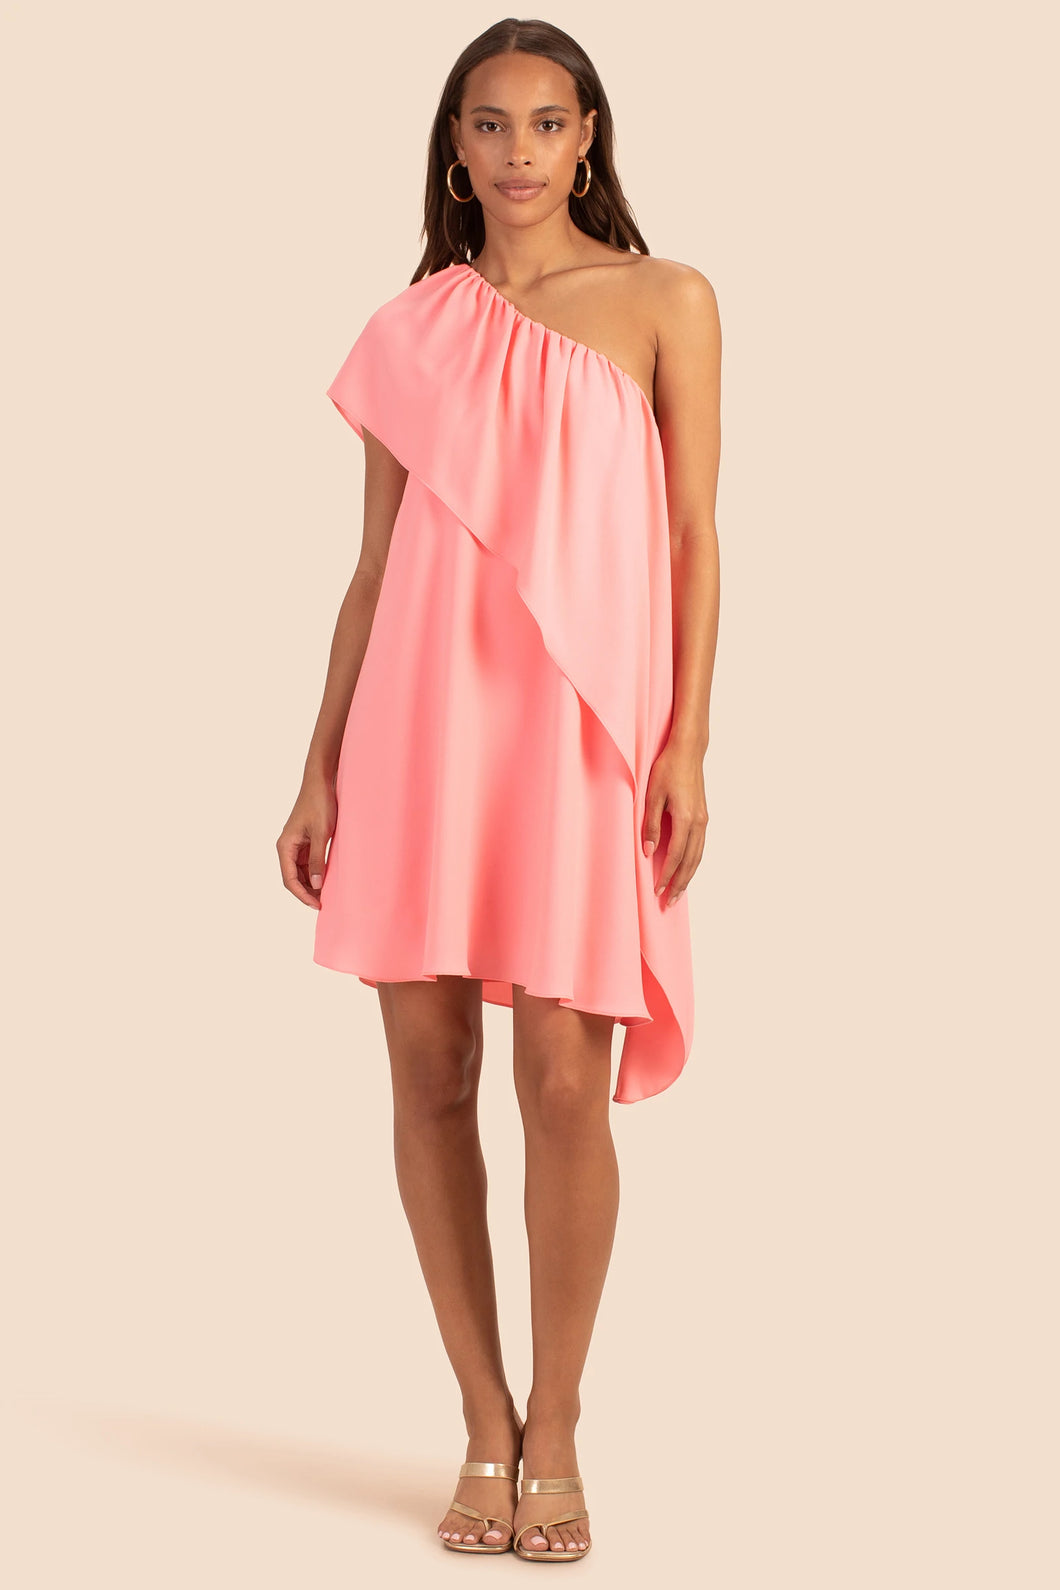 Satisfied Dress in Flamingo Pink by Trina Turk